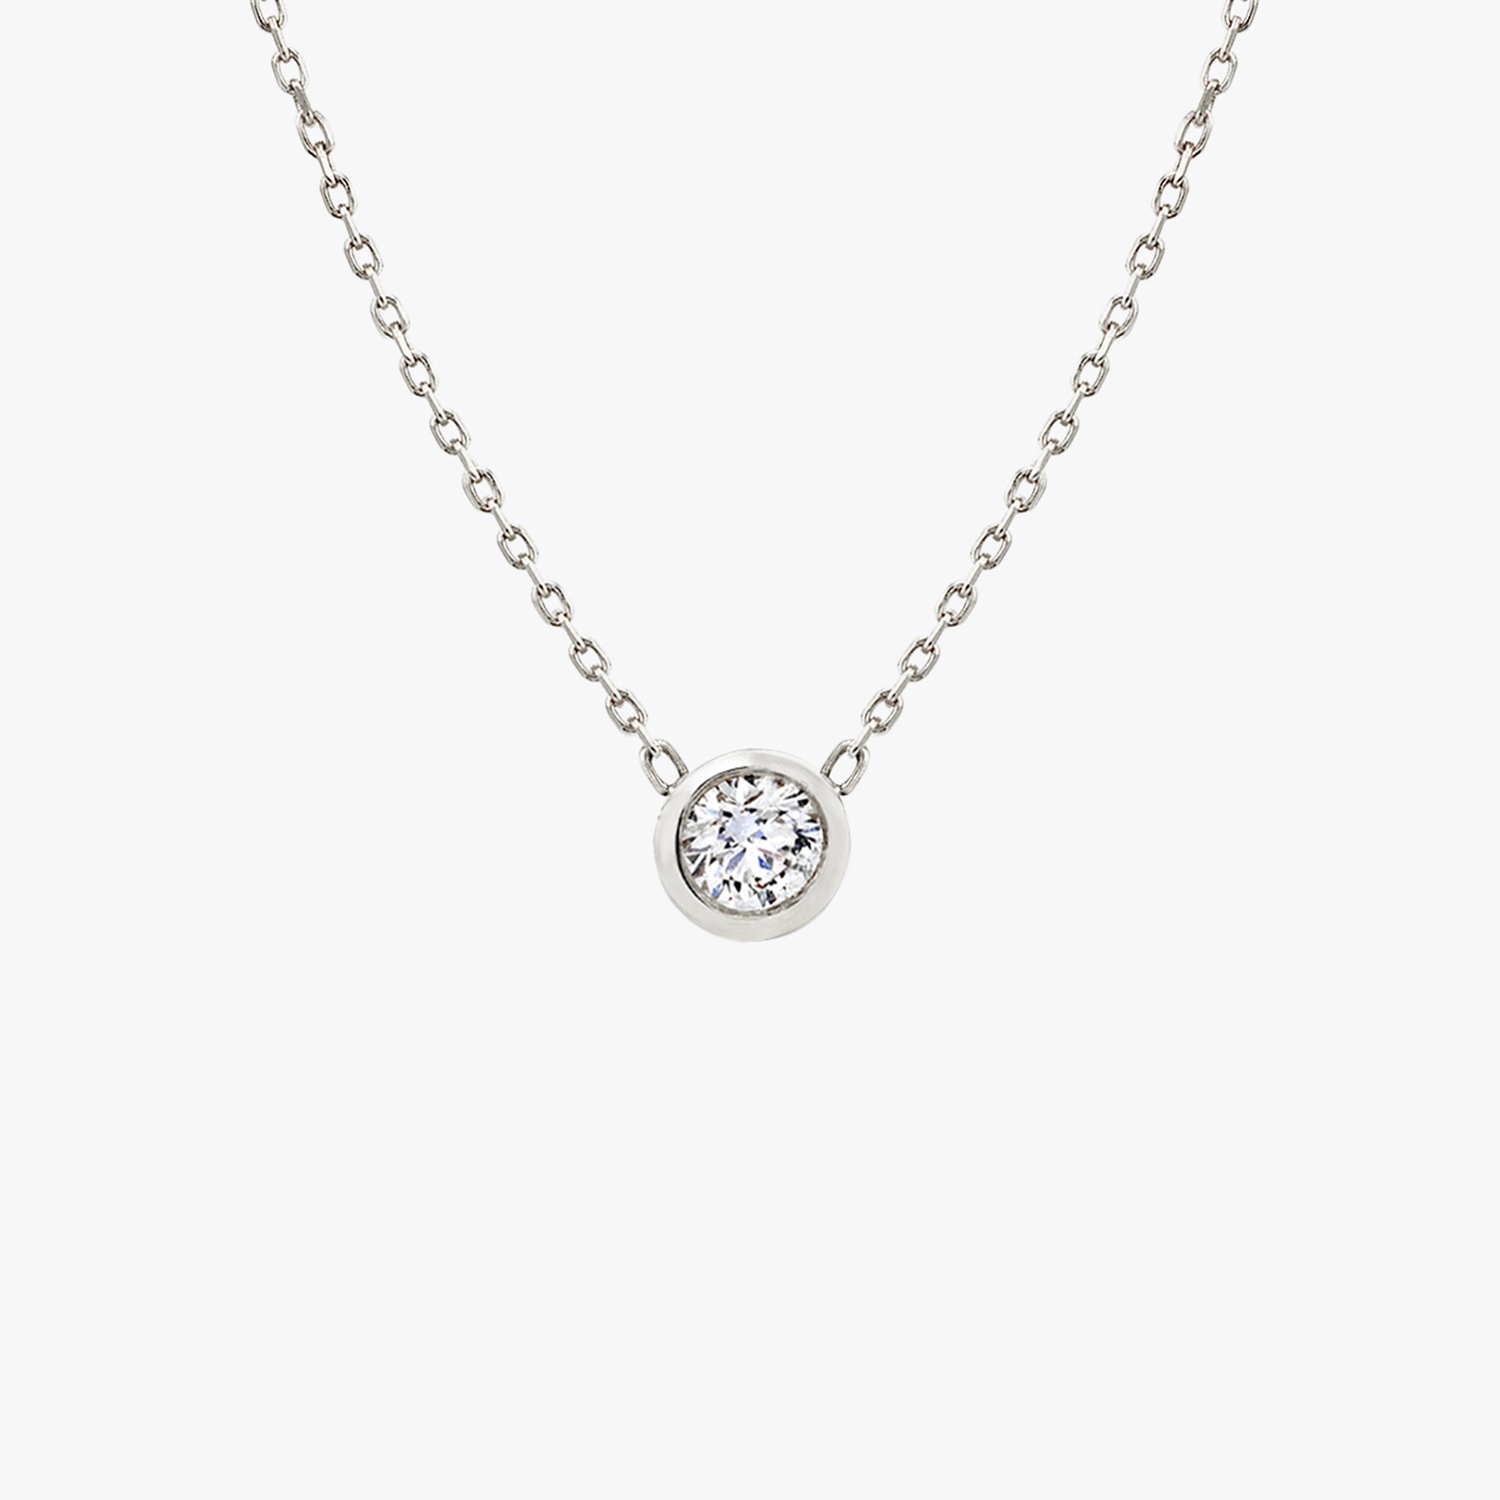 Two Bezel Diamond Necklace